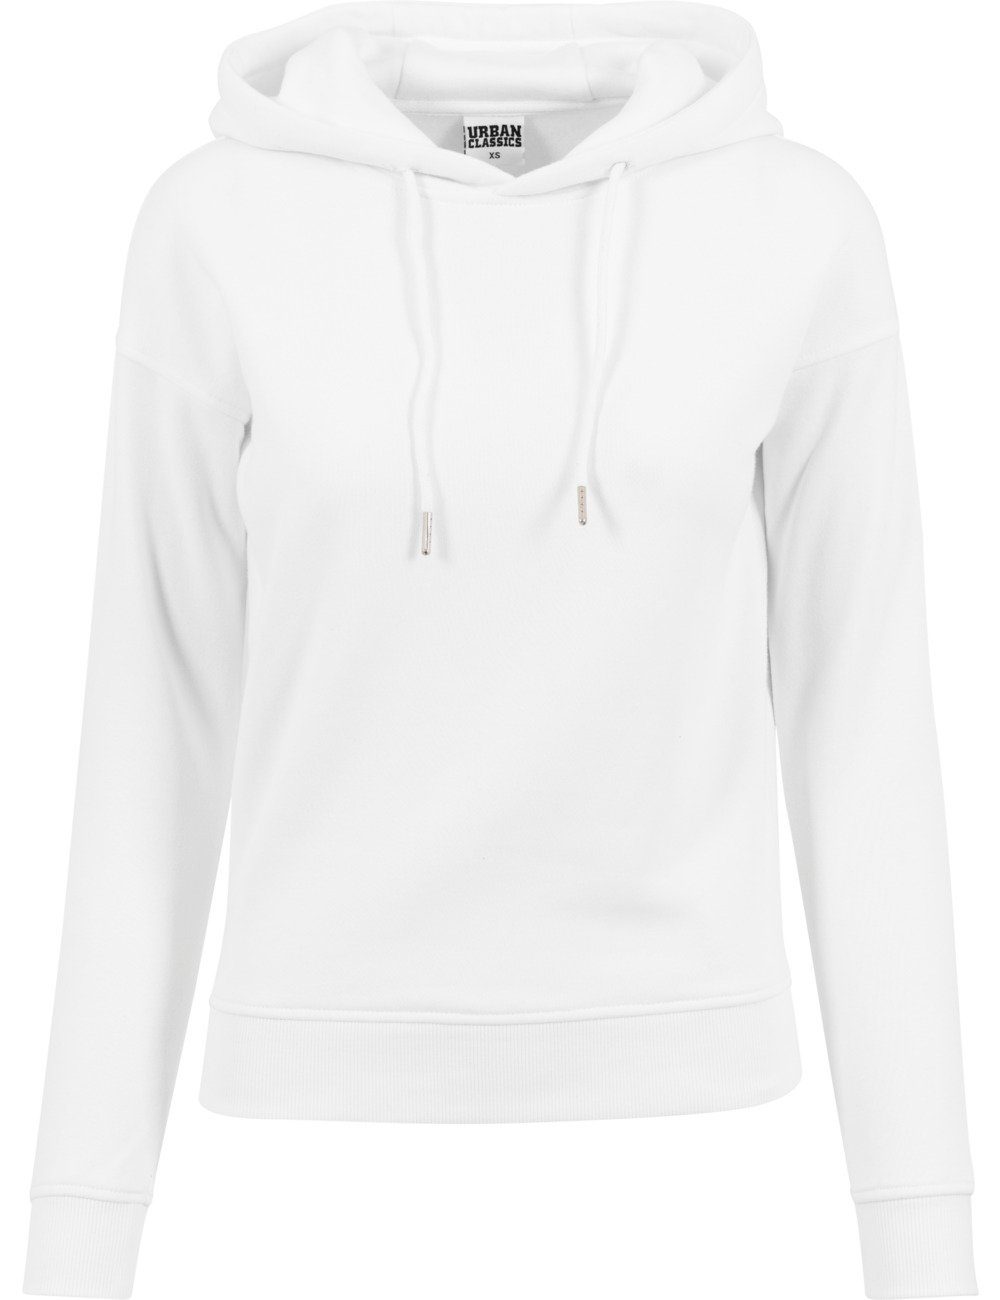 CLASSICS mit Hoody Kapuzenpullover Sweater Kapuze White URBAN (20220)